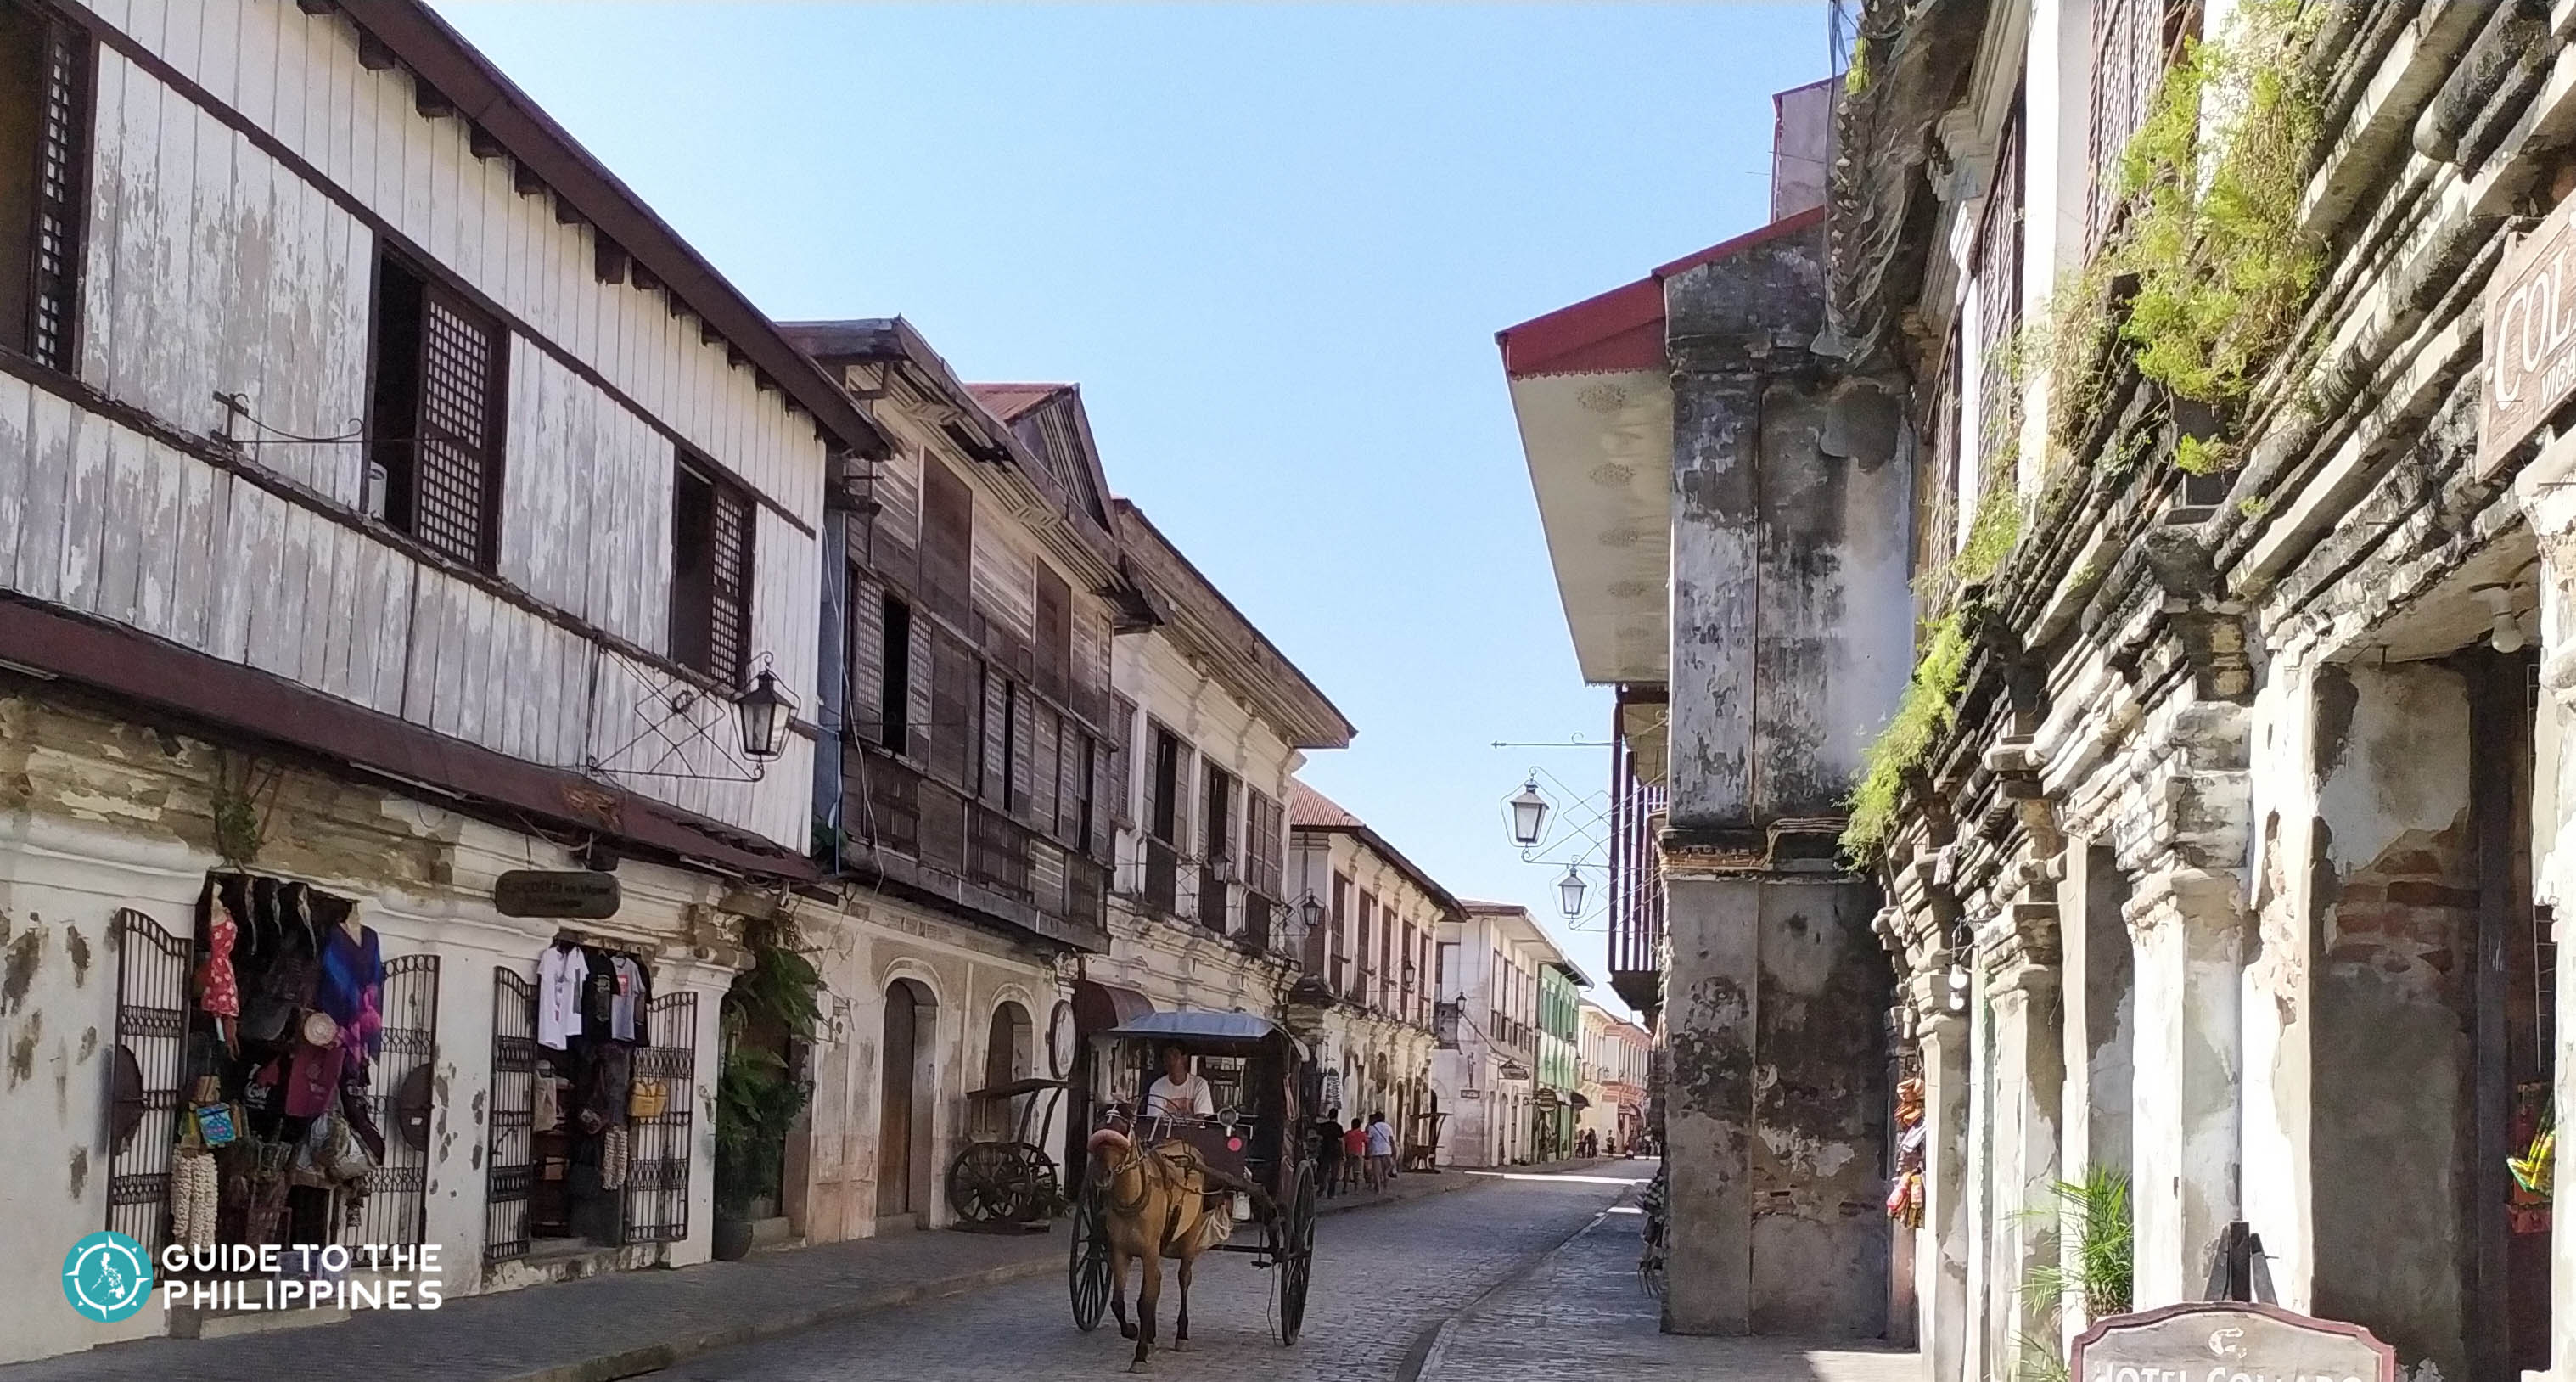 Cobblestone streets of Calle Crisologo in Vigan, Ilocos Sur